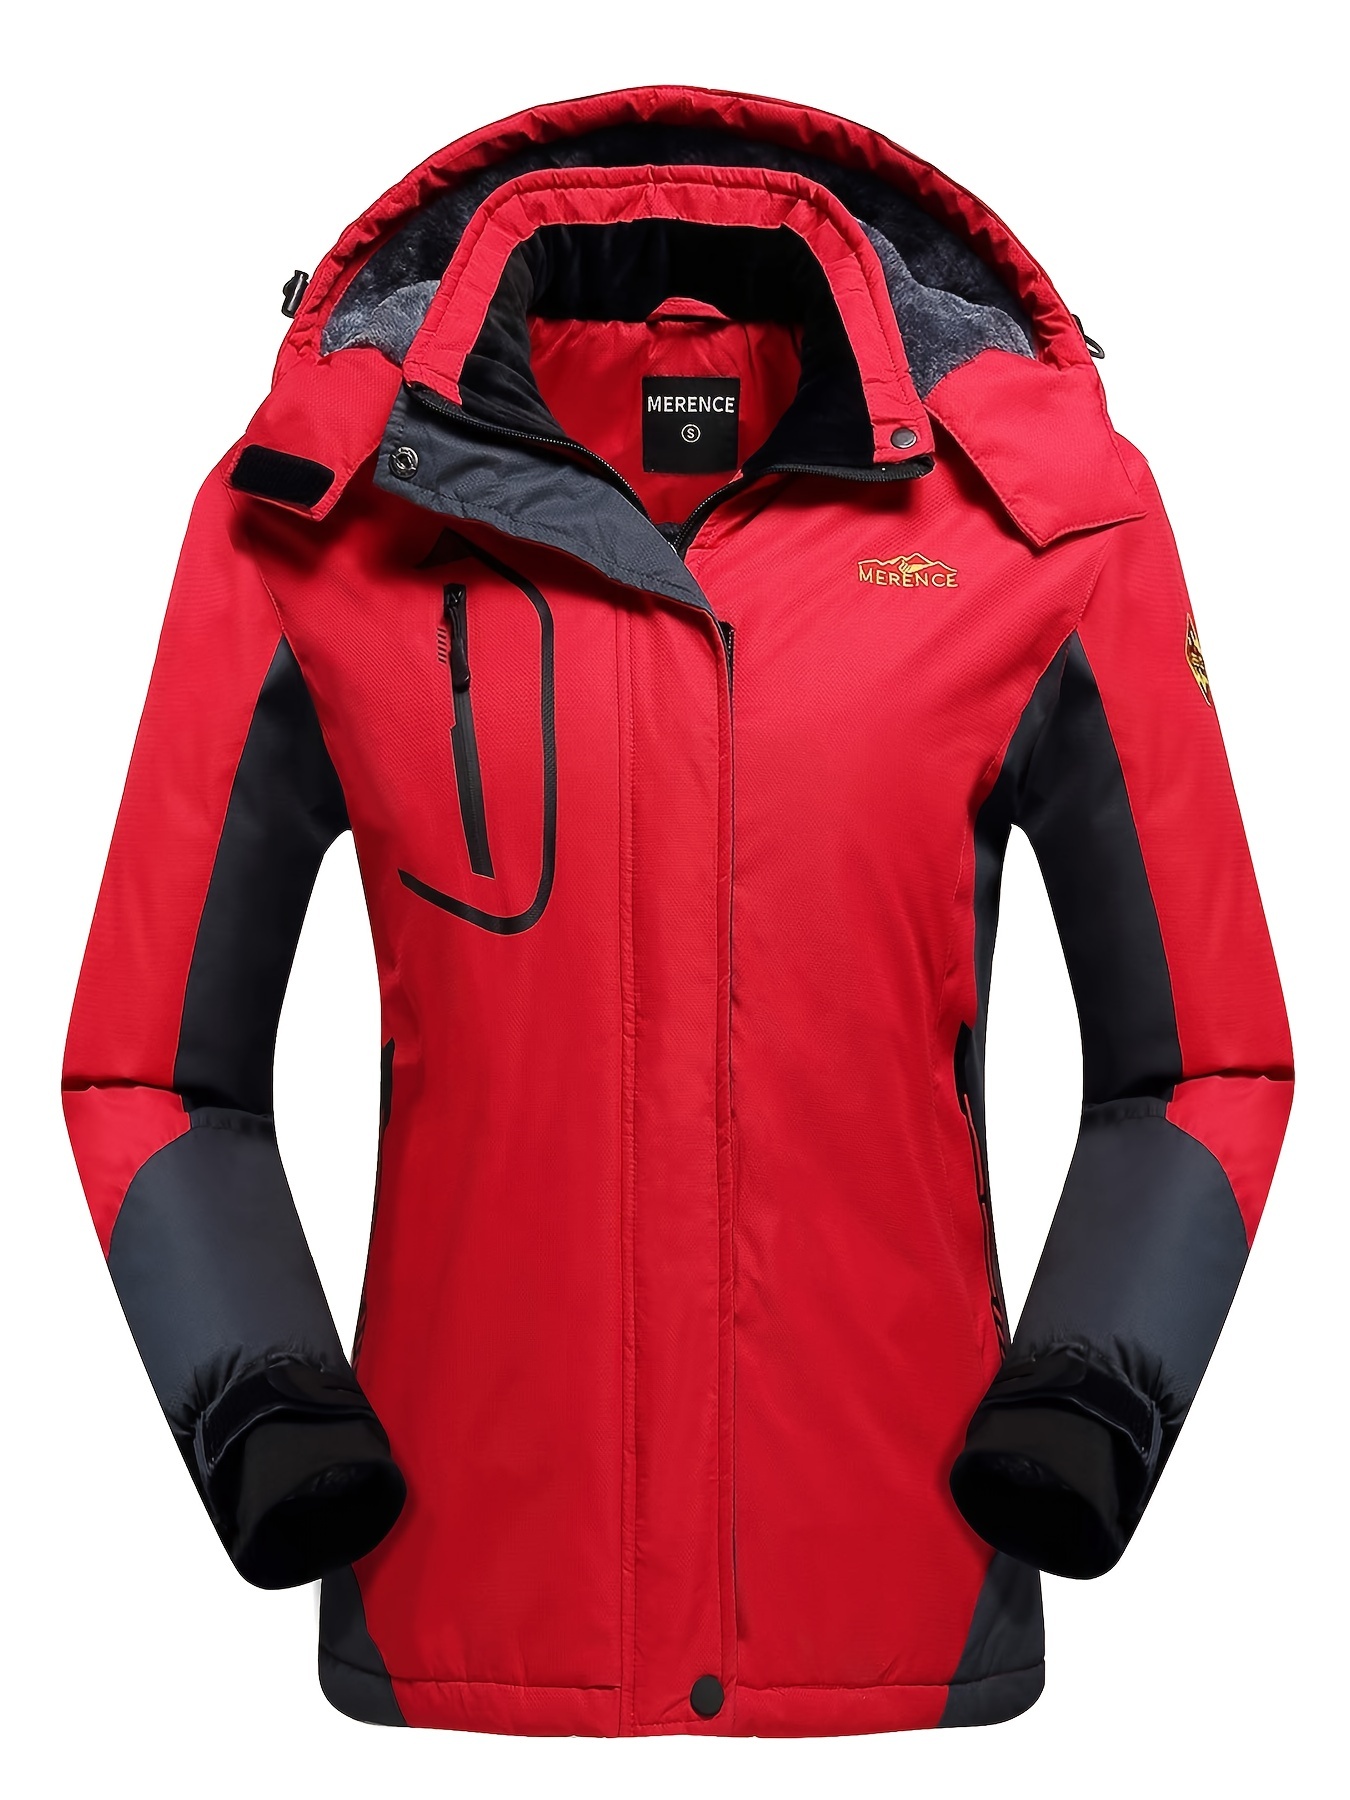 Abrigo de nieve mujer chaqueta esquí montaña de segunda mano por